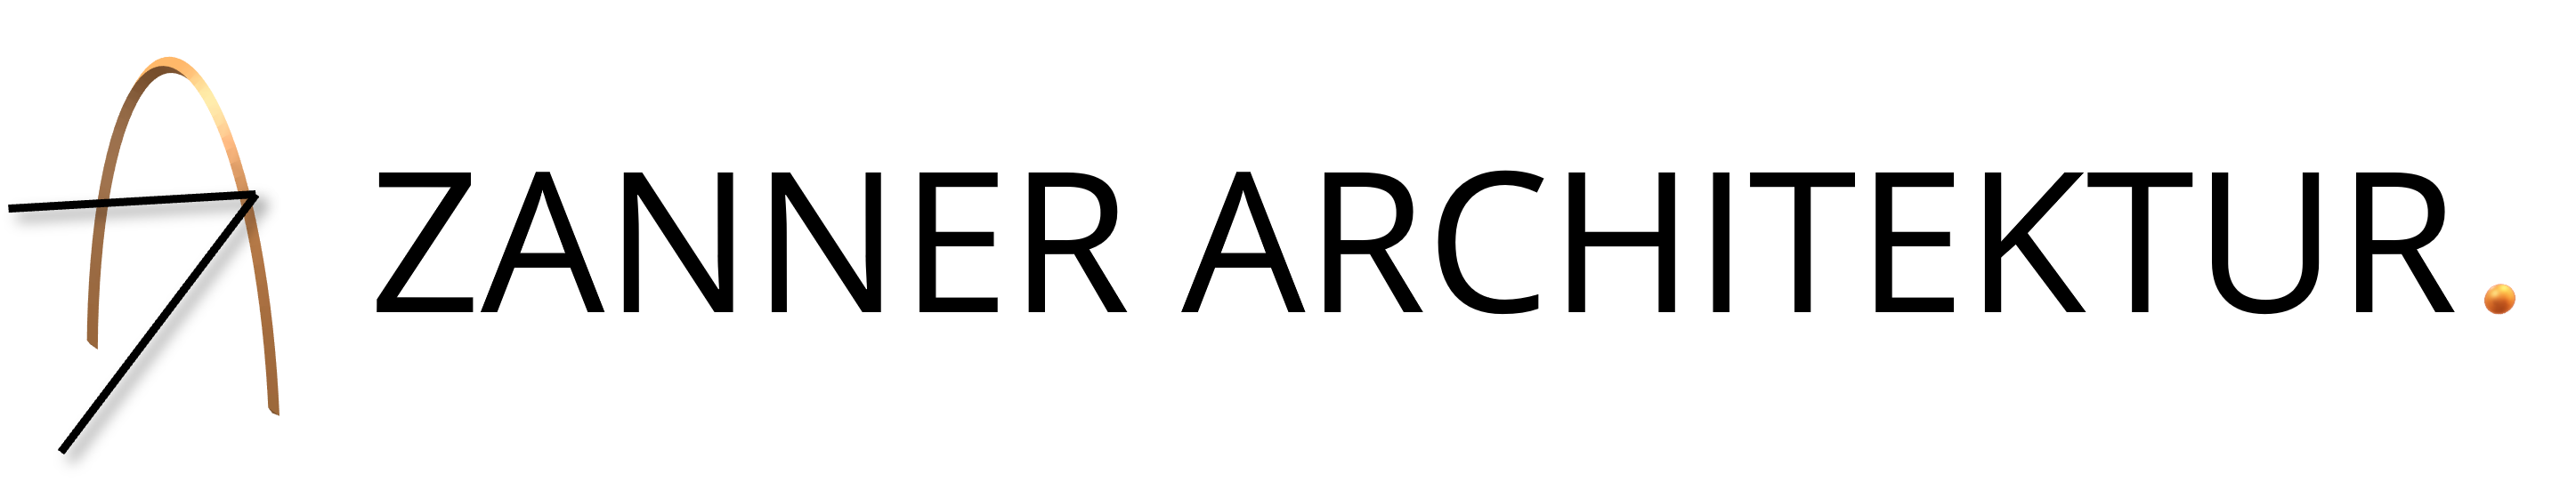 Zanner Architektur Logo